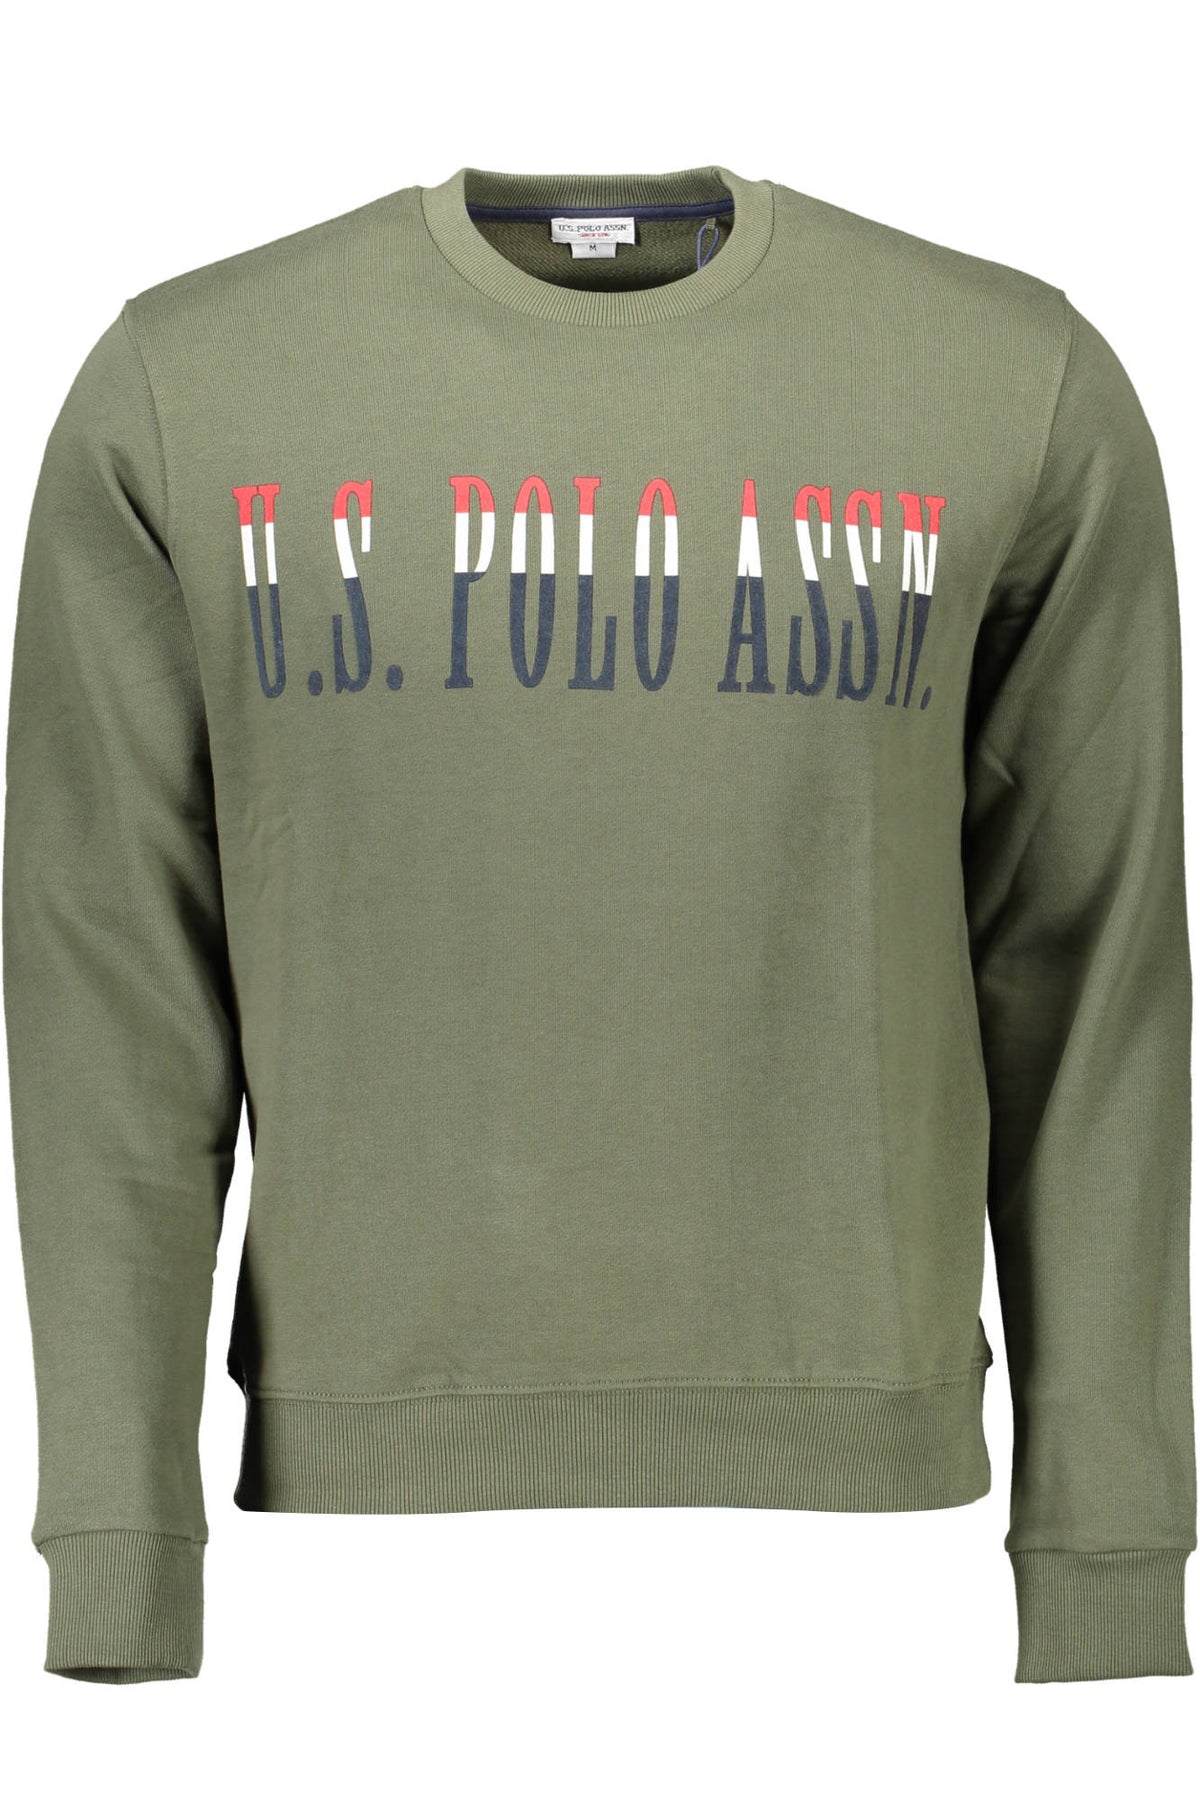 U.S. POLO Herren Pullover Sweatshirt Shirt Oberteil Sweater